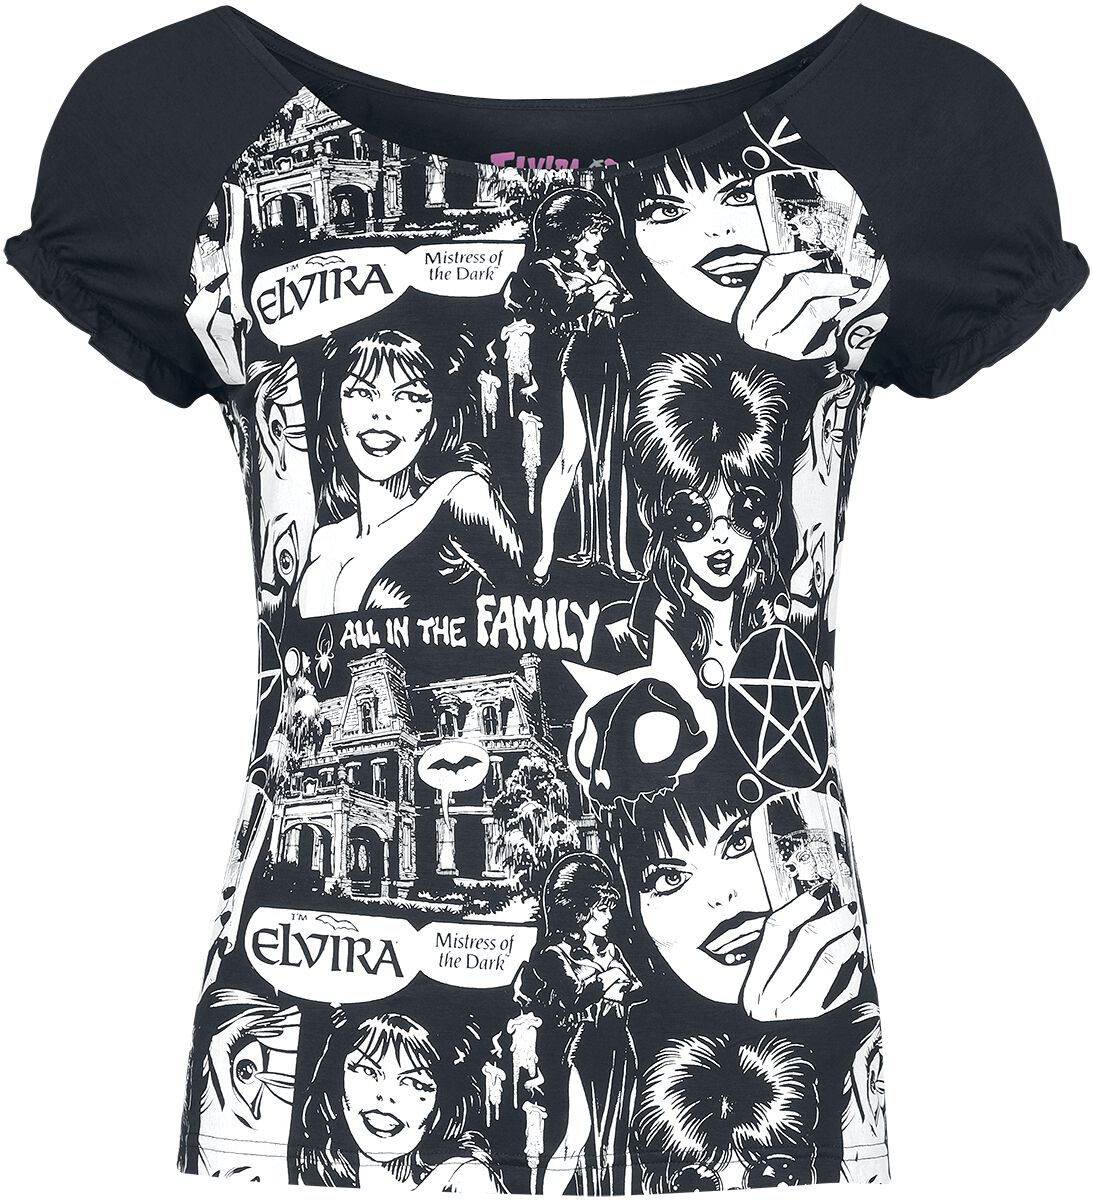 Gothicana by EMP Gothicana X Elvira T-Shirt T-Shirt schwarz in XXL